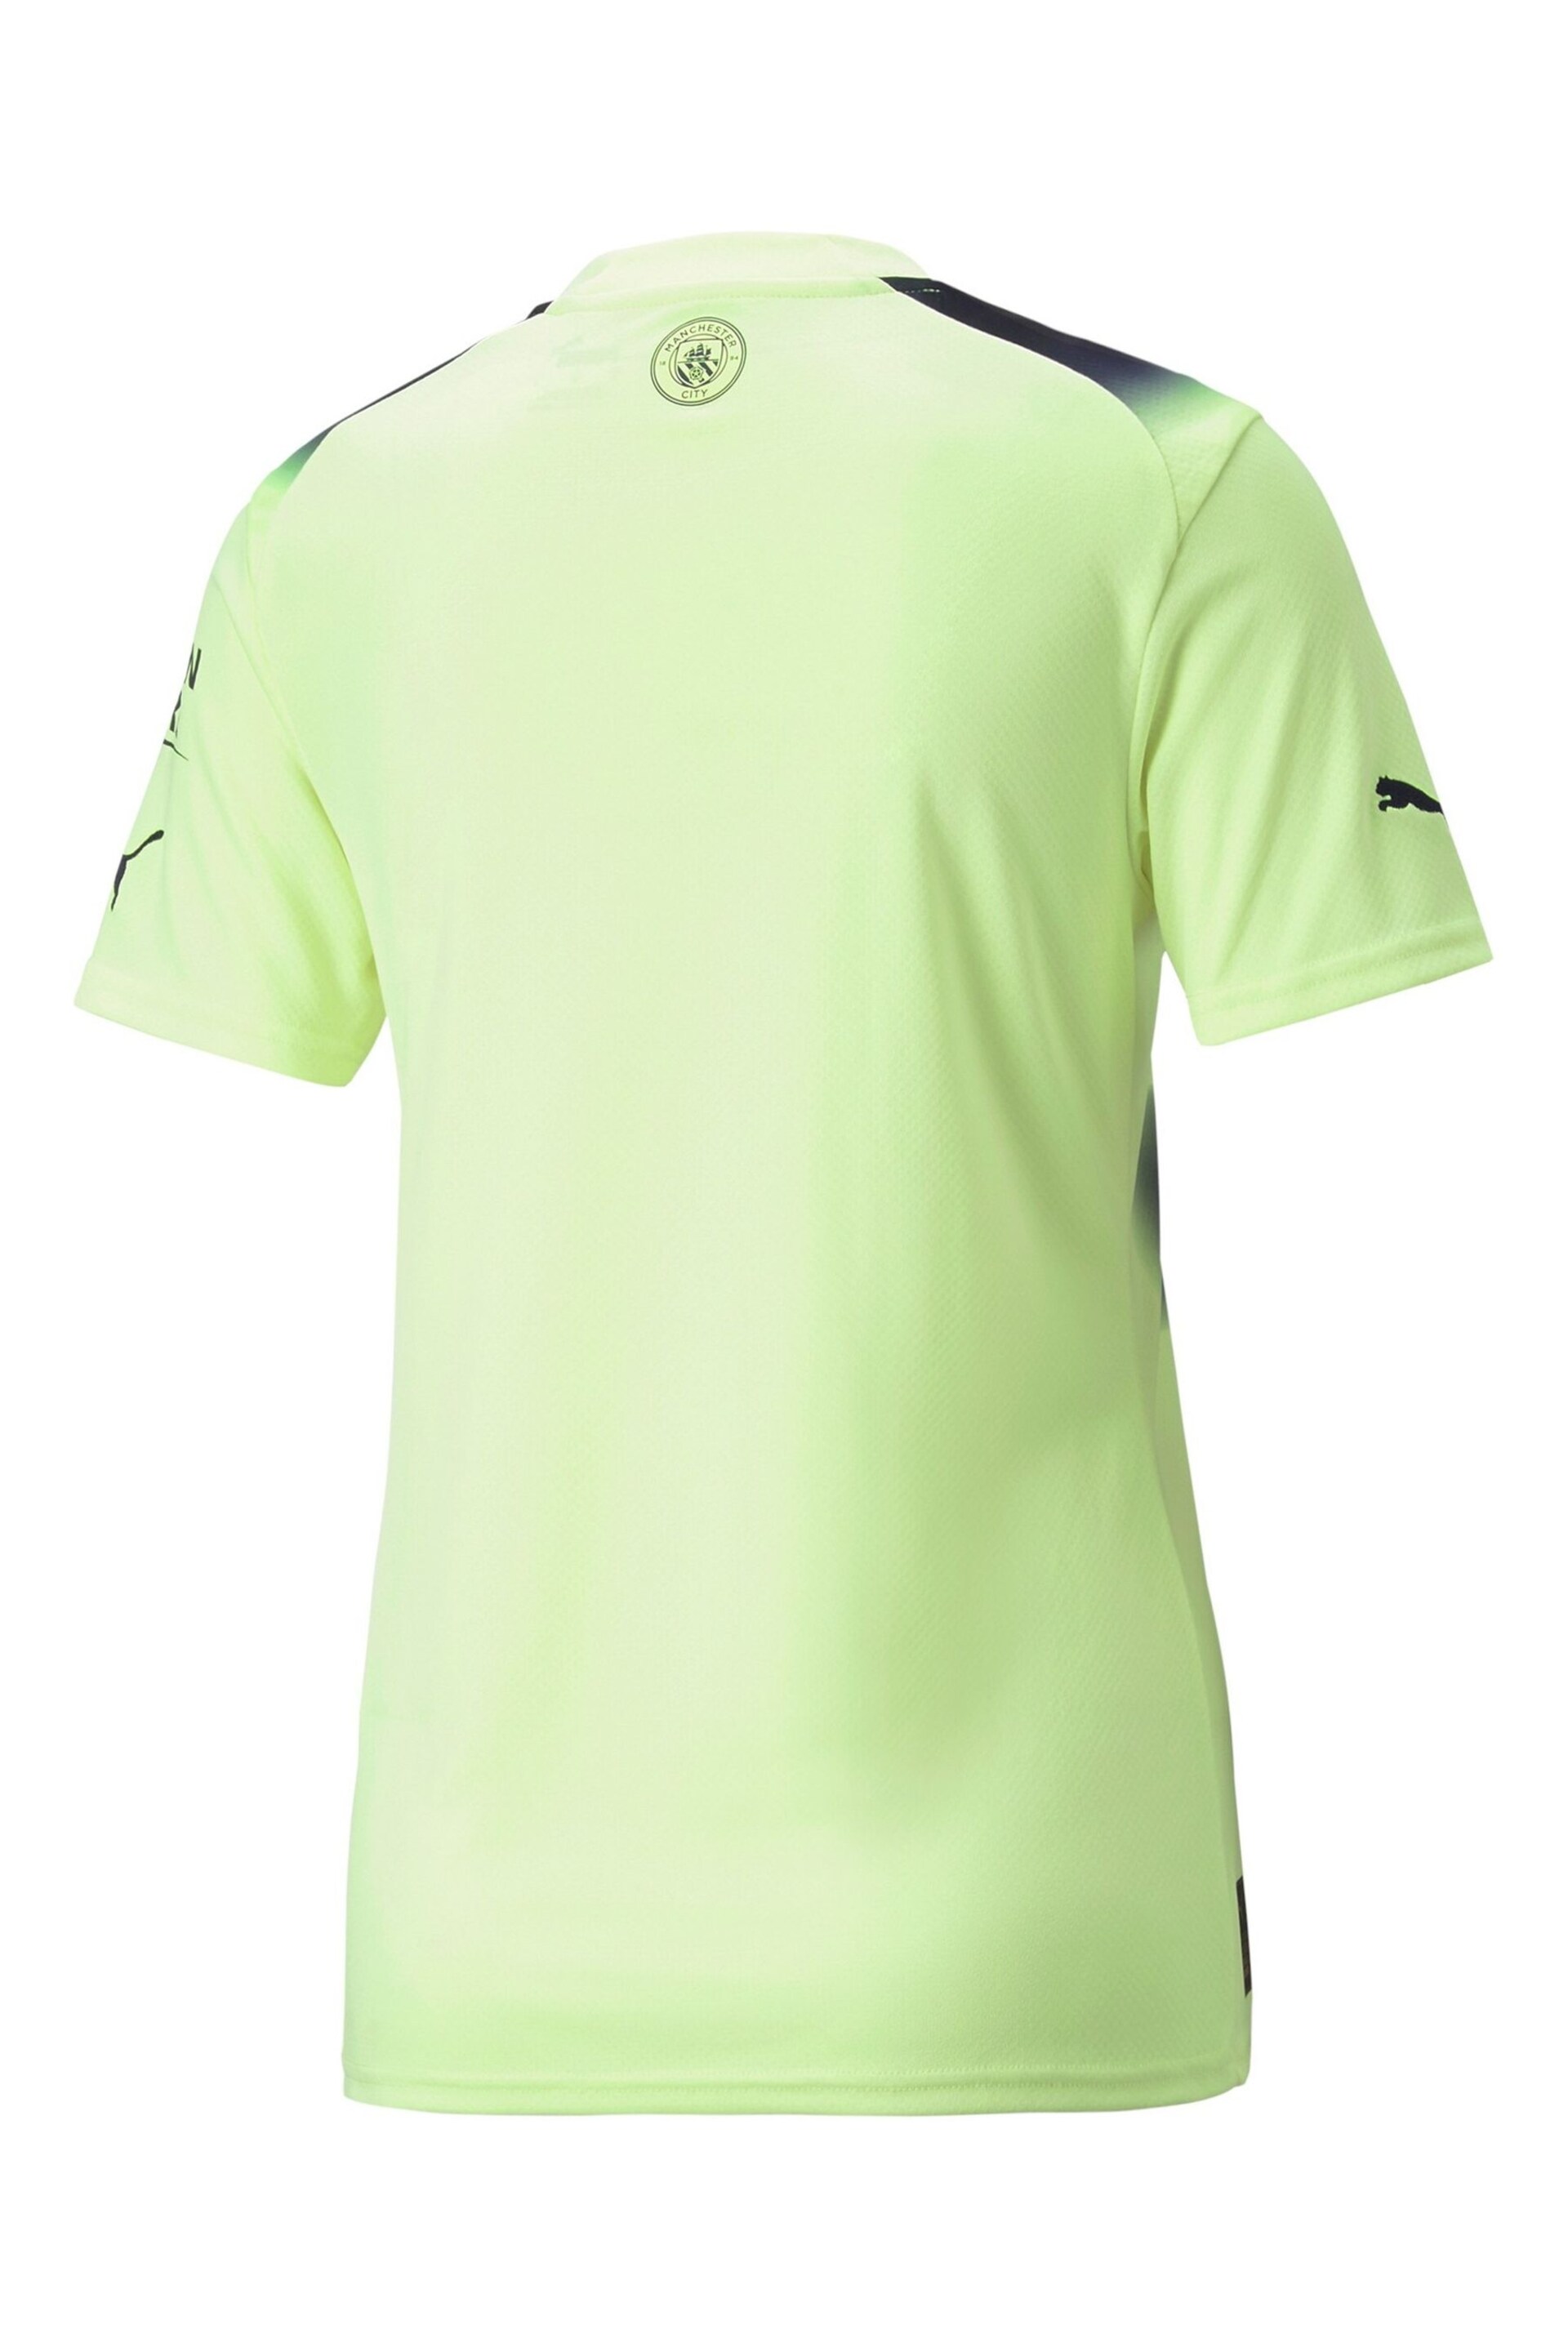 Puma White Manchester City Third Football Shirt 2022-23 Kids - Image 3 of 3